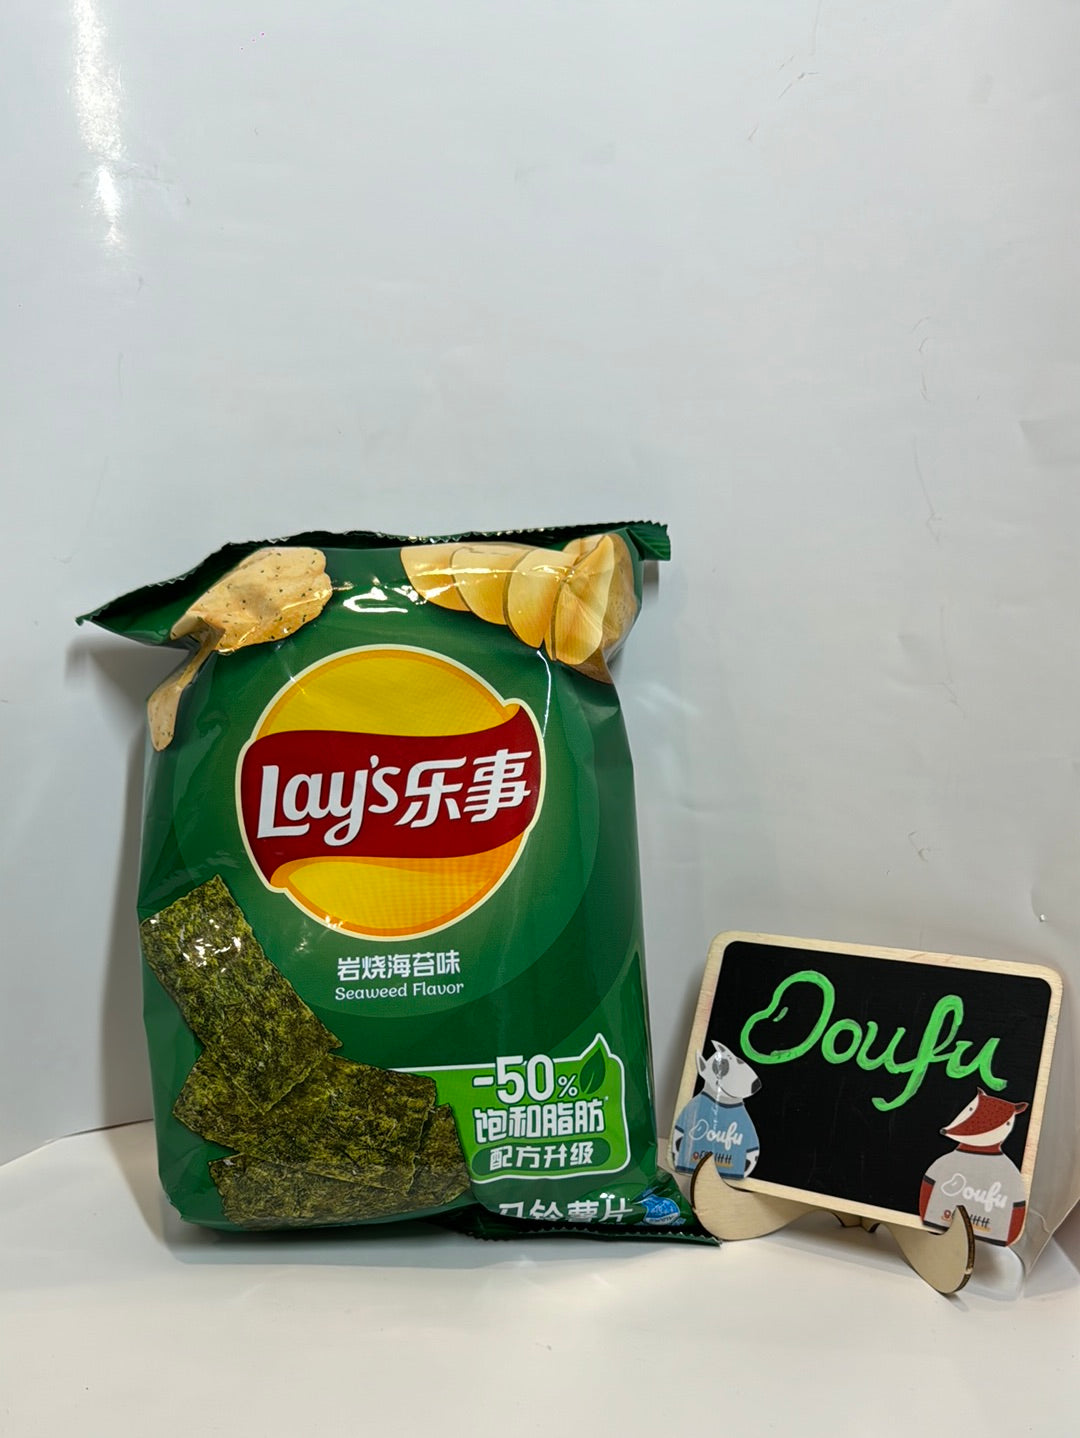 Lays seaweed flavor 乐事海苔 70g